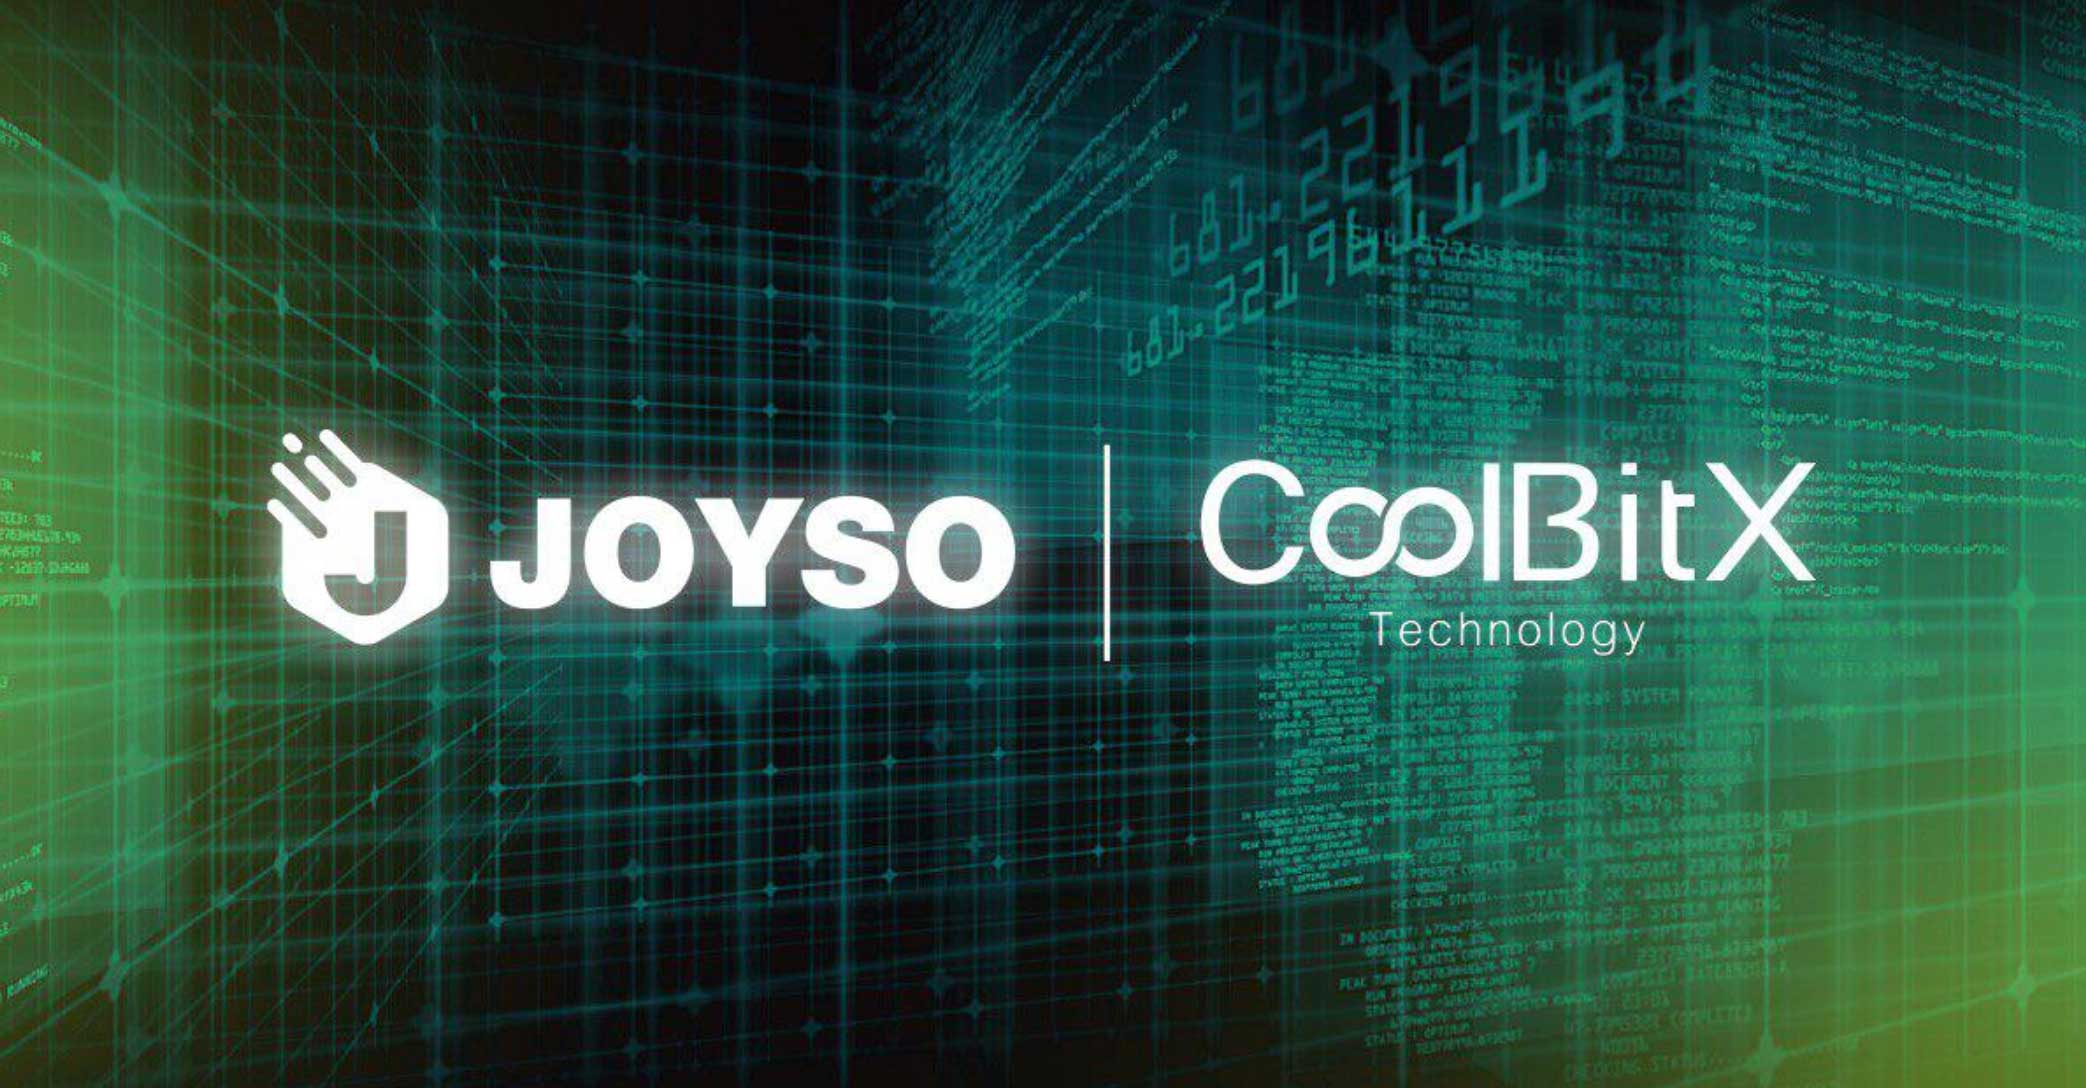 CoolBitX Partnership with JOYSO the Crypto Exchange